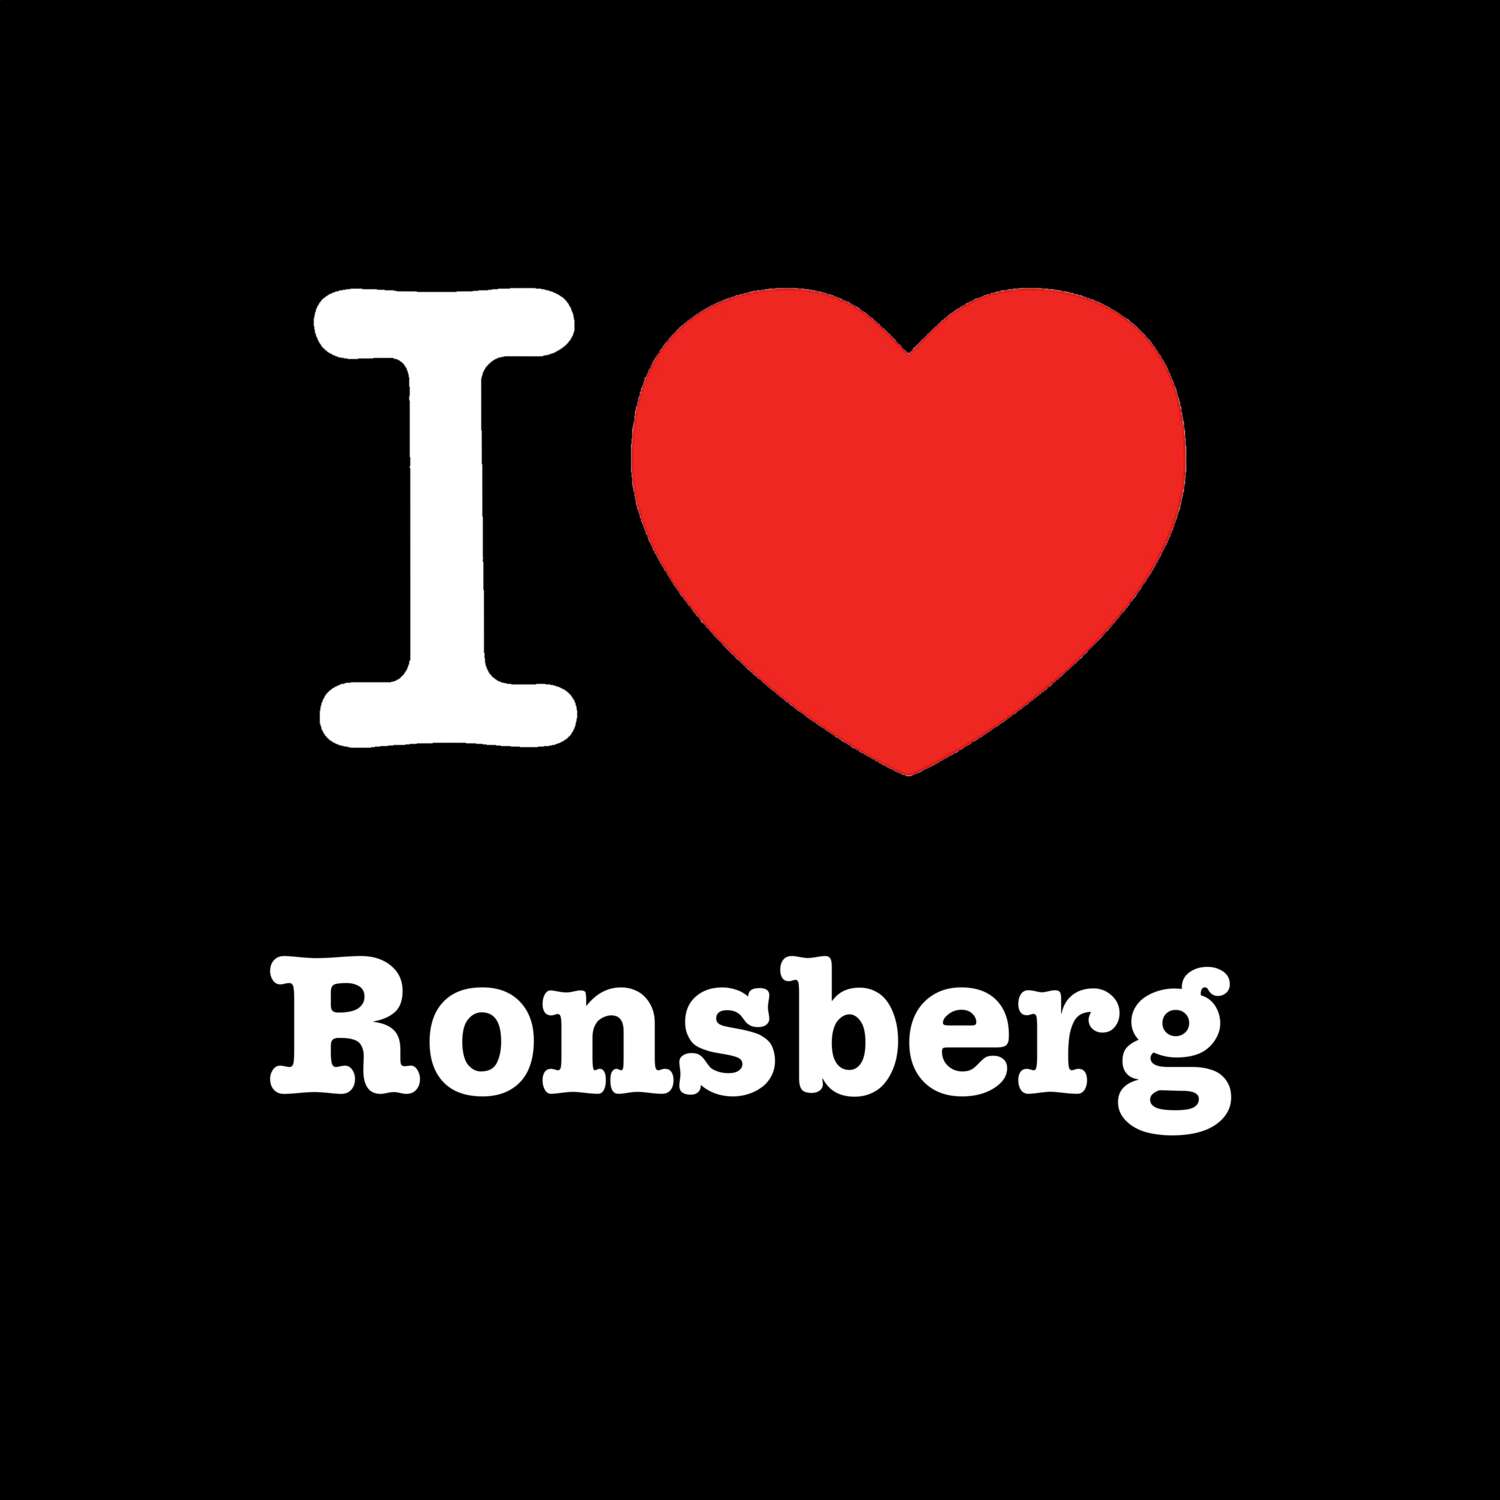 Ronsberg T-Shirt »I love«